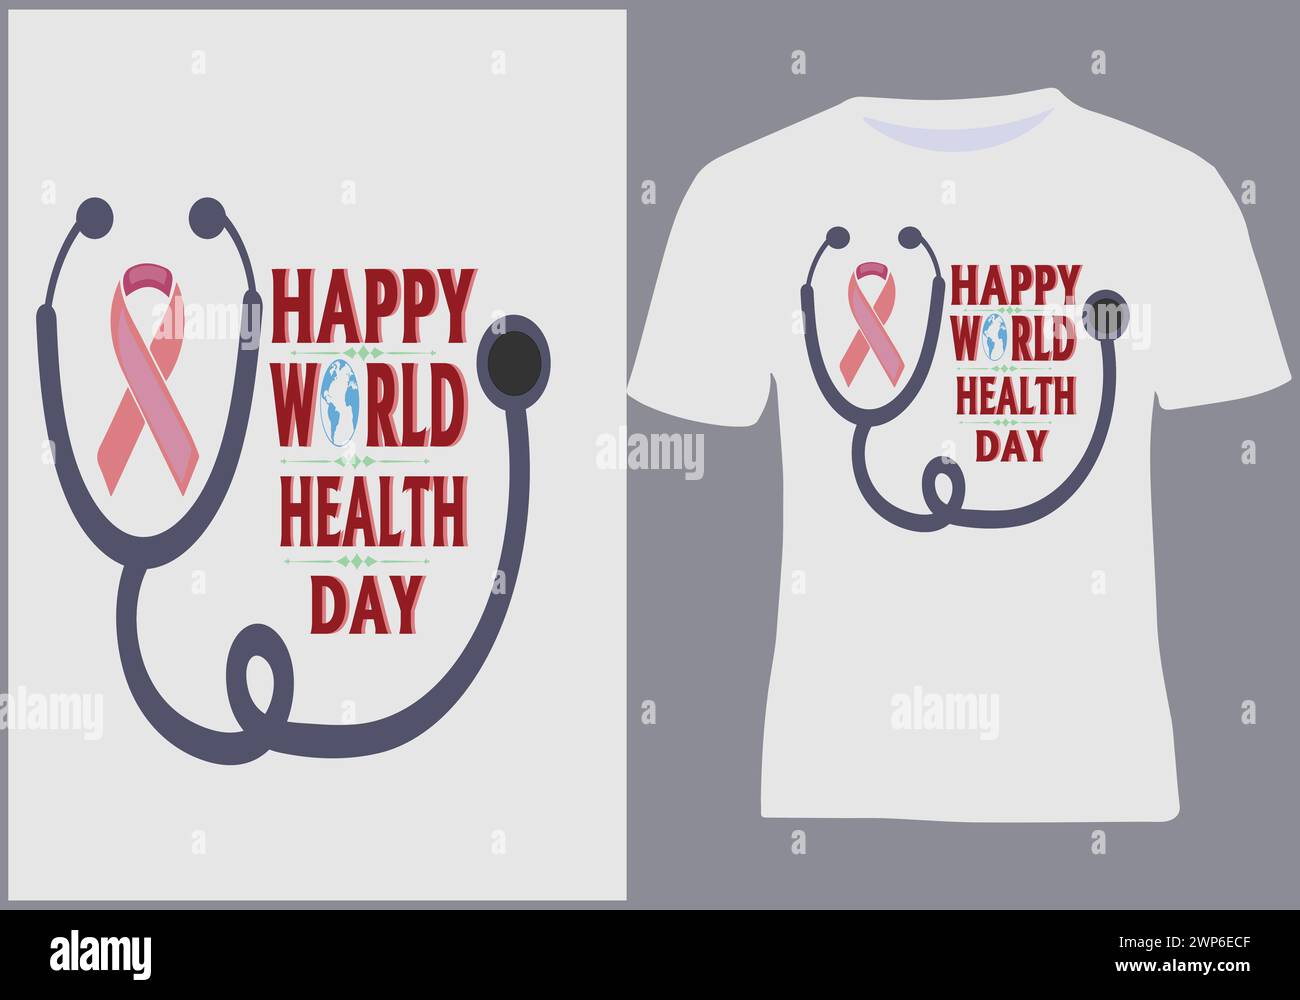 Happy world health day t shirt desiffor Ladies Gens Stock Vector